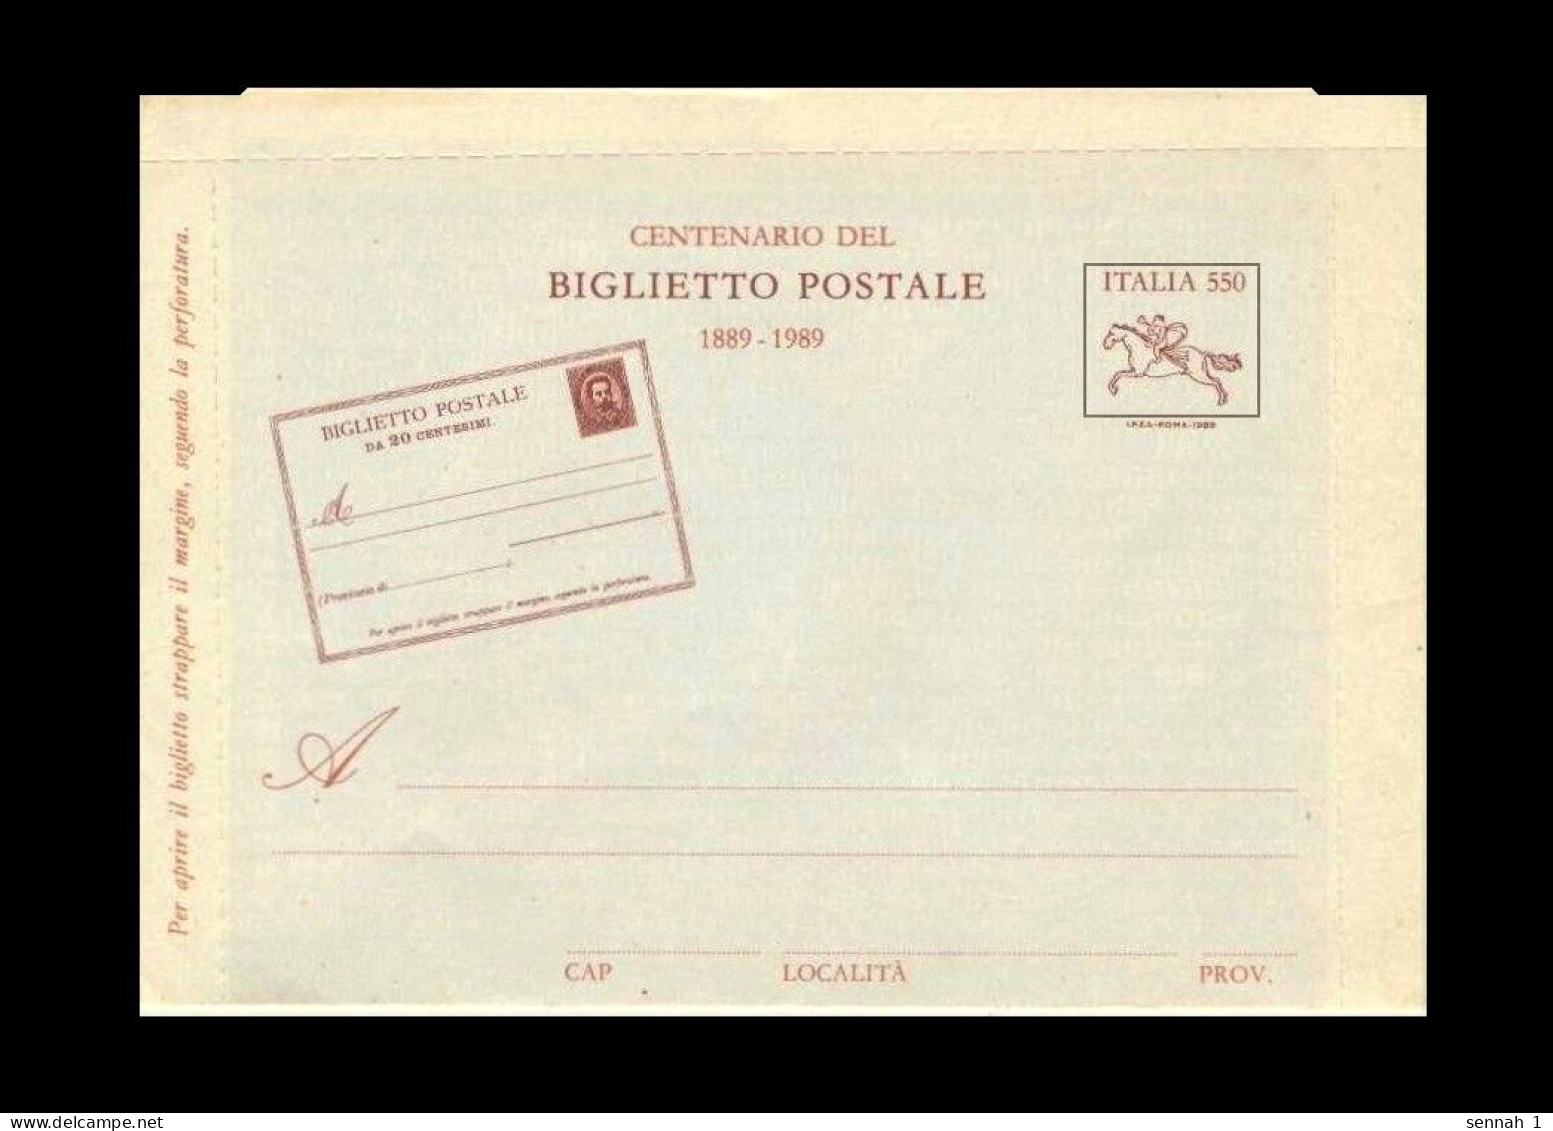 Italien / Italy: Ganzsache '100 Jahre Postkarten, 1989' / Stationery' Centenary Of Postcards' / 'Biglietto Postale' ** - Post